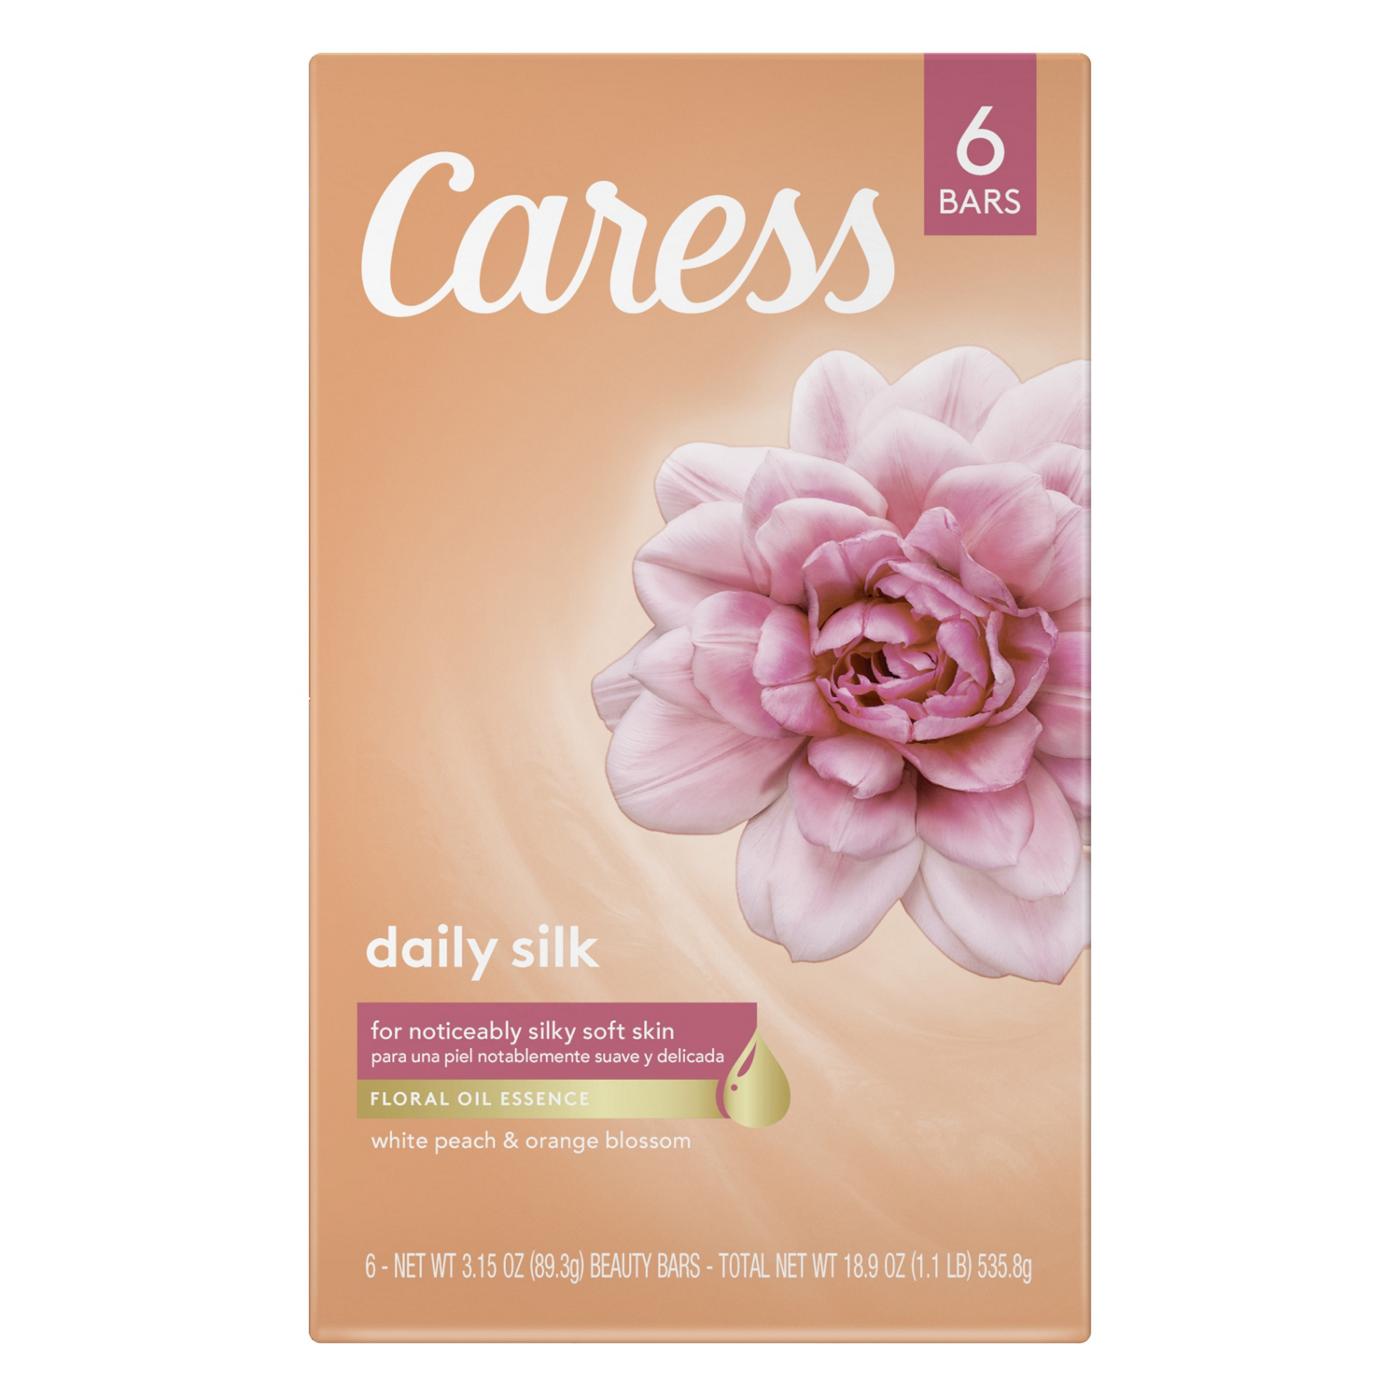 Caress Daily Silk Beauty Bar Soap; image 1 of 2